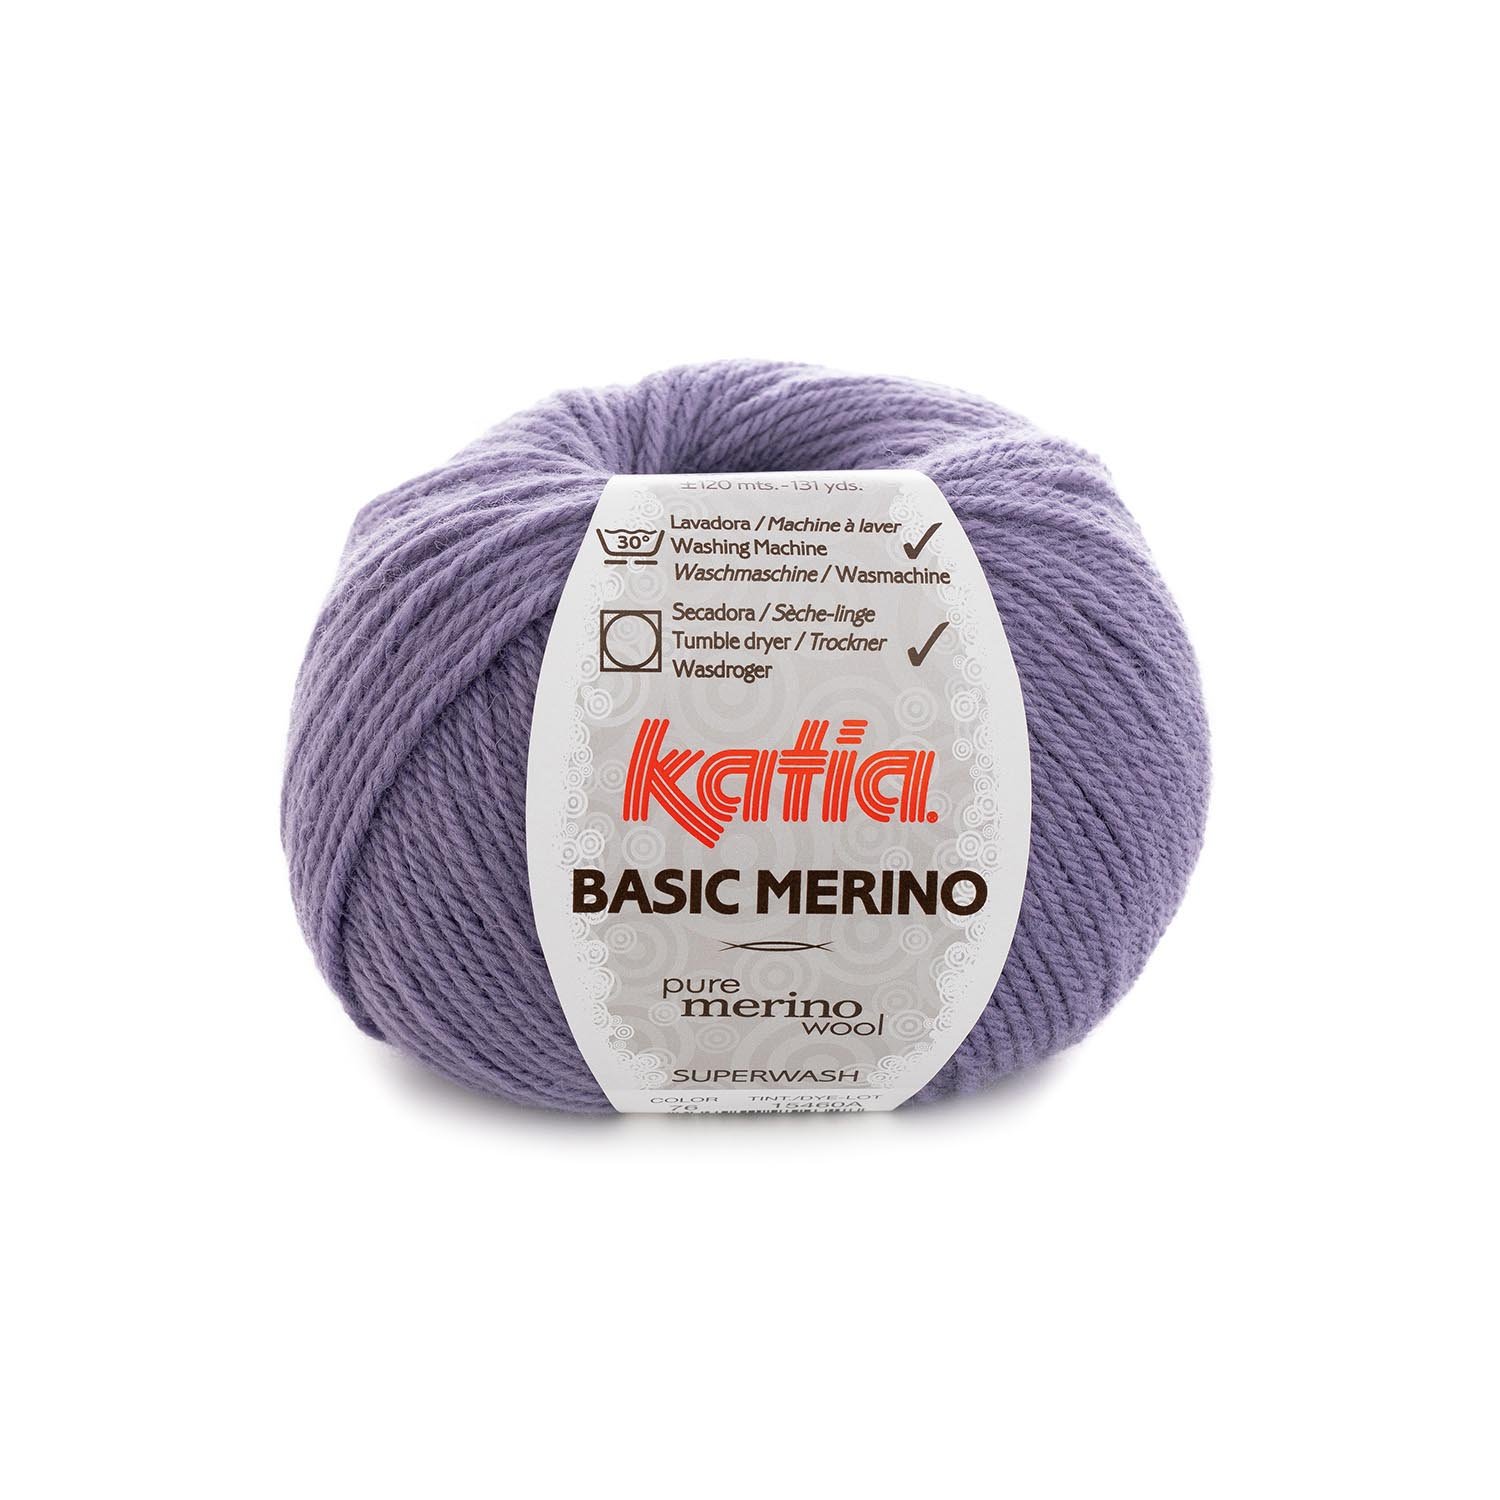 76 laine-fil-basicmerino-tricoter-merino-superwash-acrylique-lilas-automne-hiver-katia-76-fhd